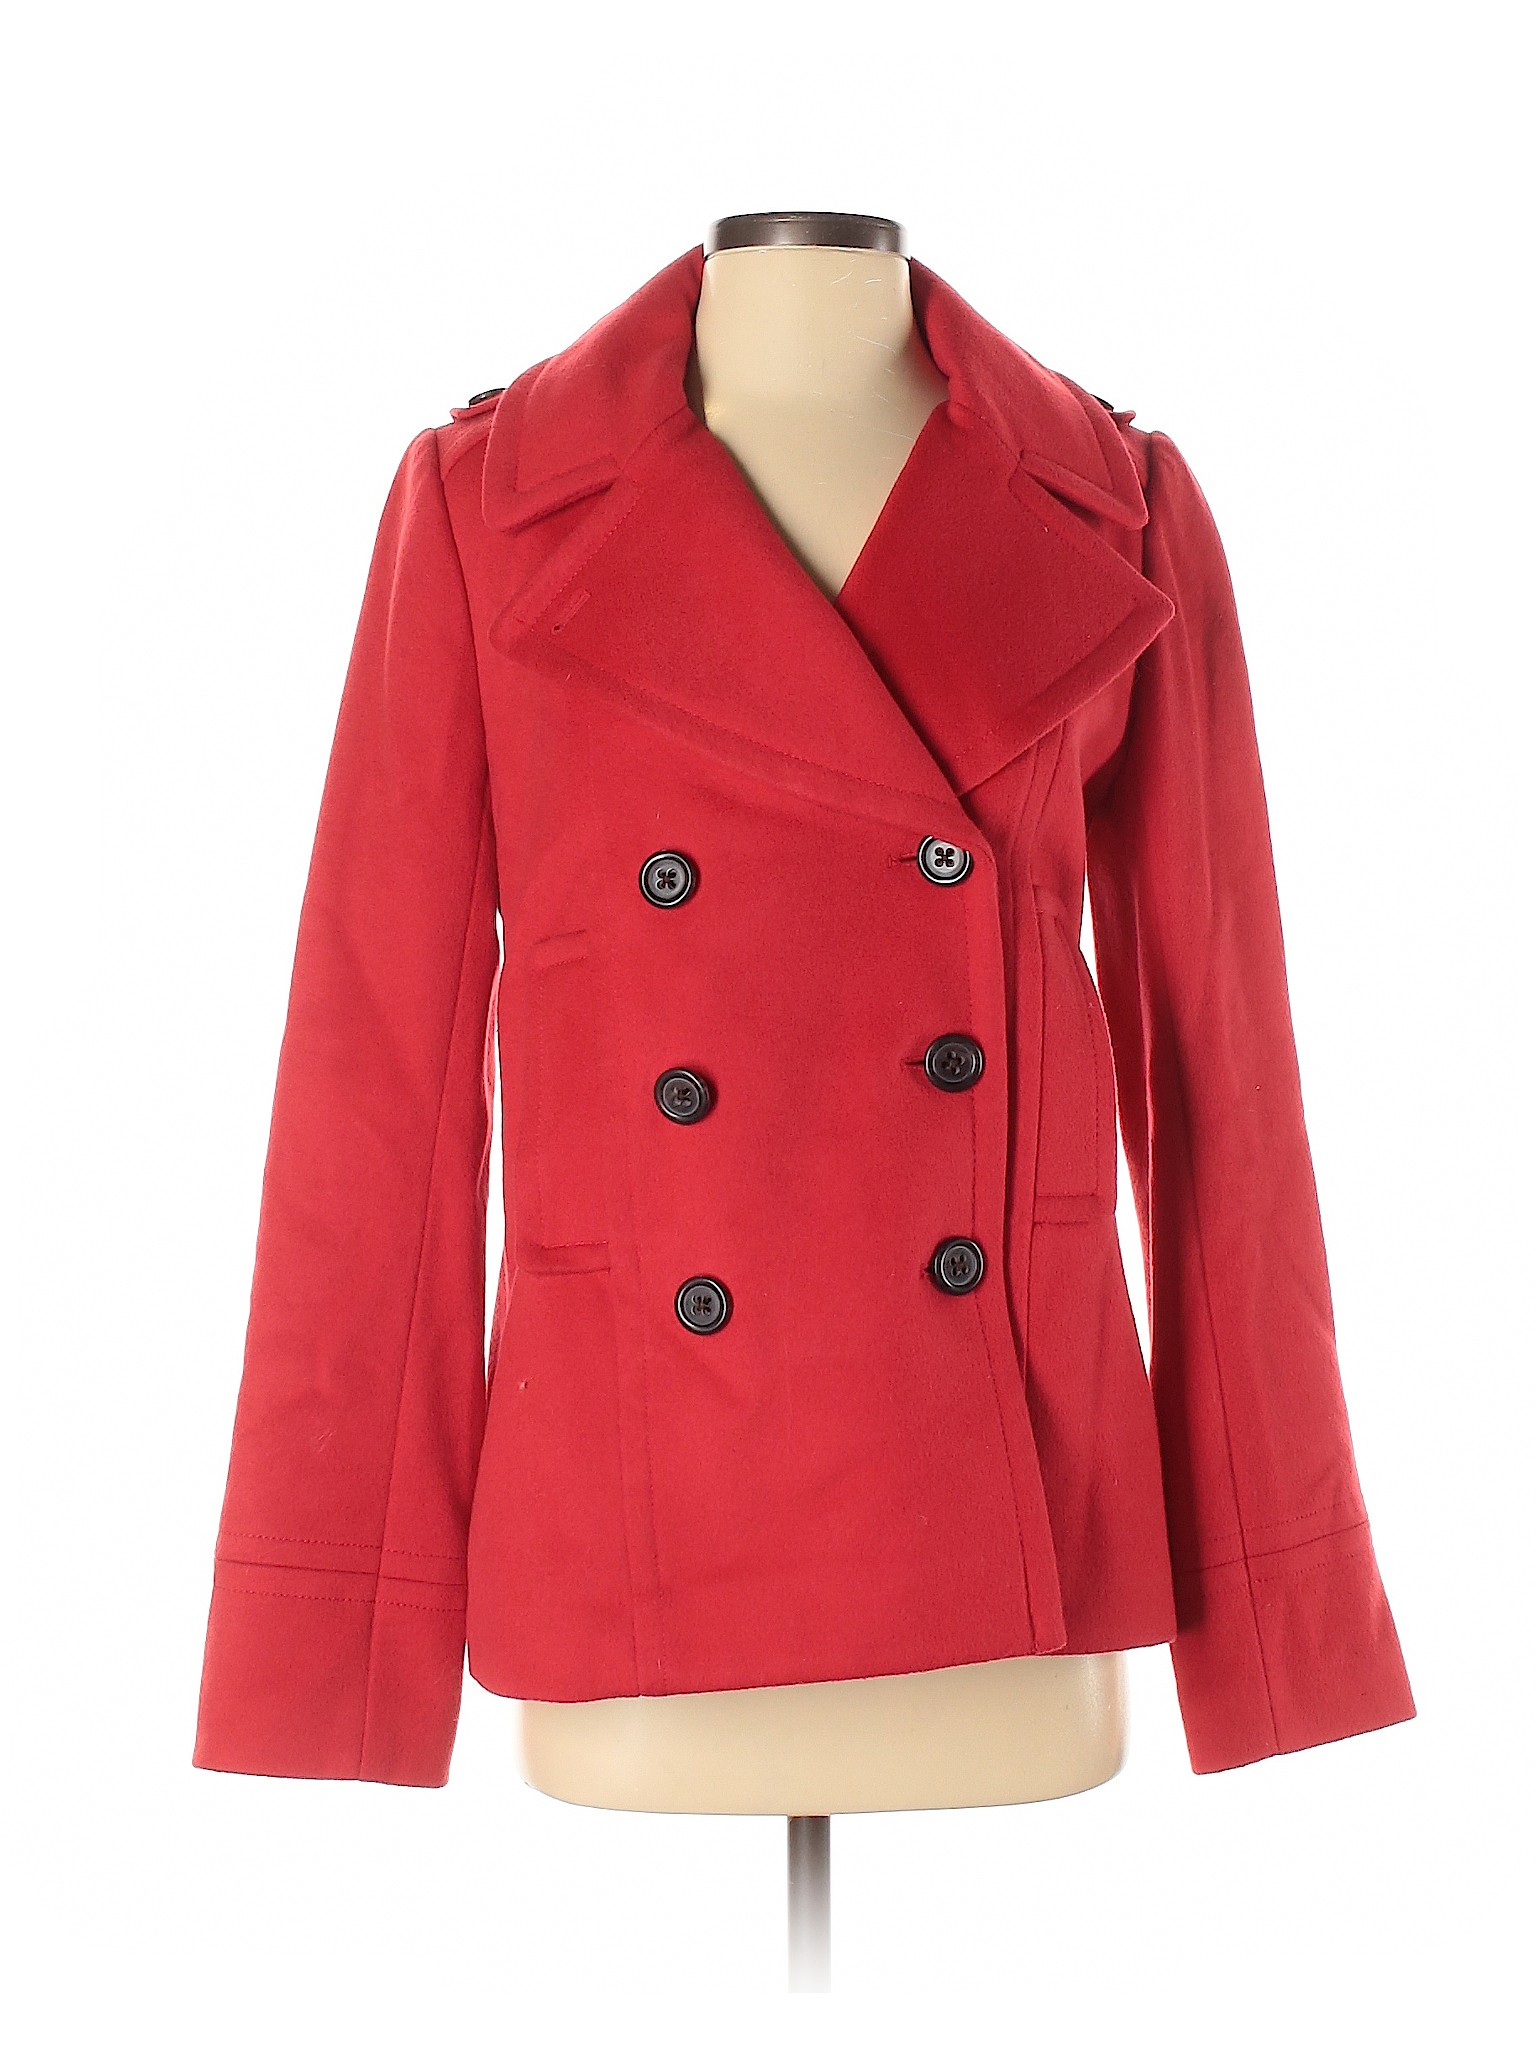 J.Crew Women Red Wool Coat 2 Tall | eBay